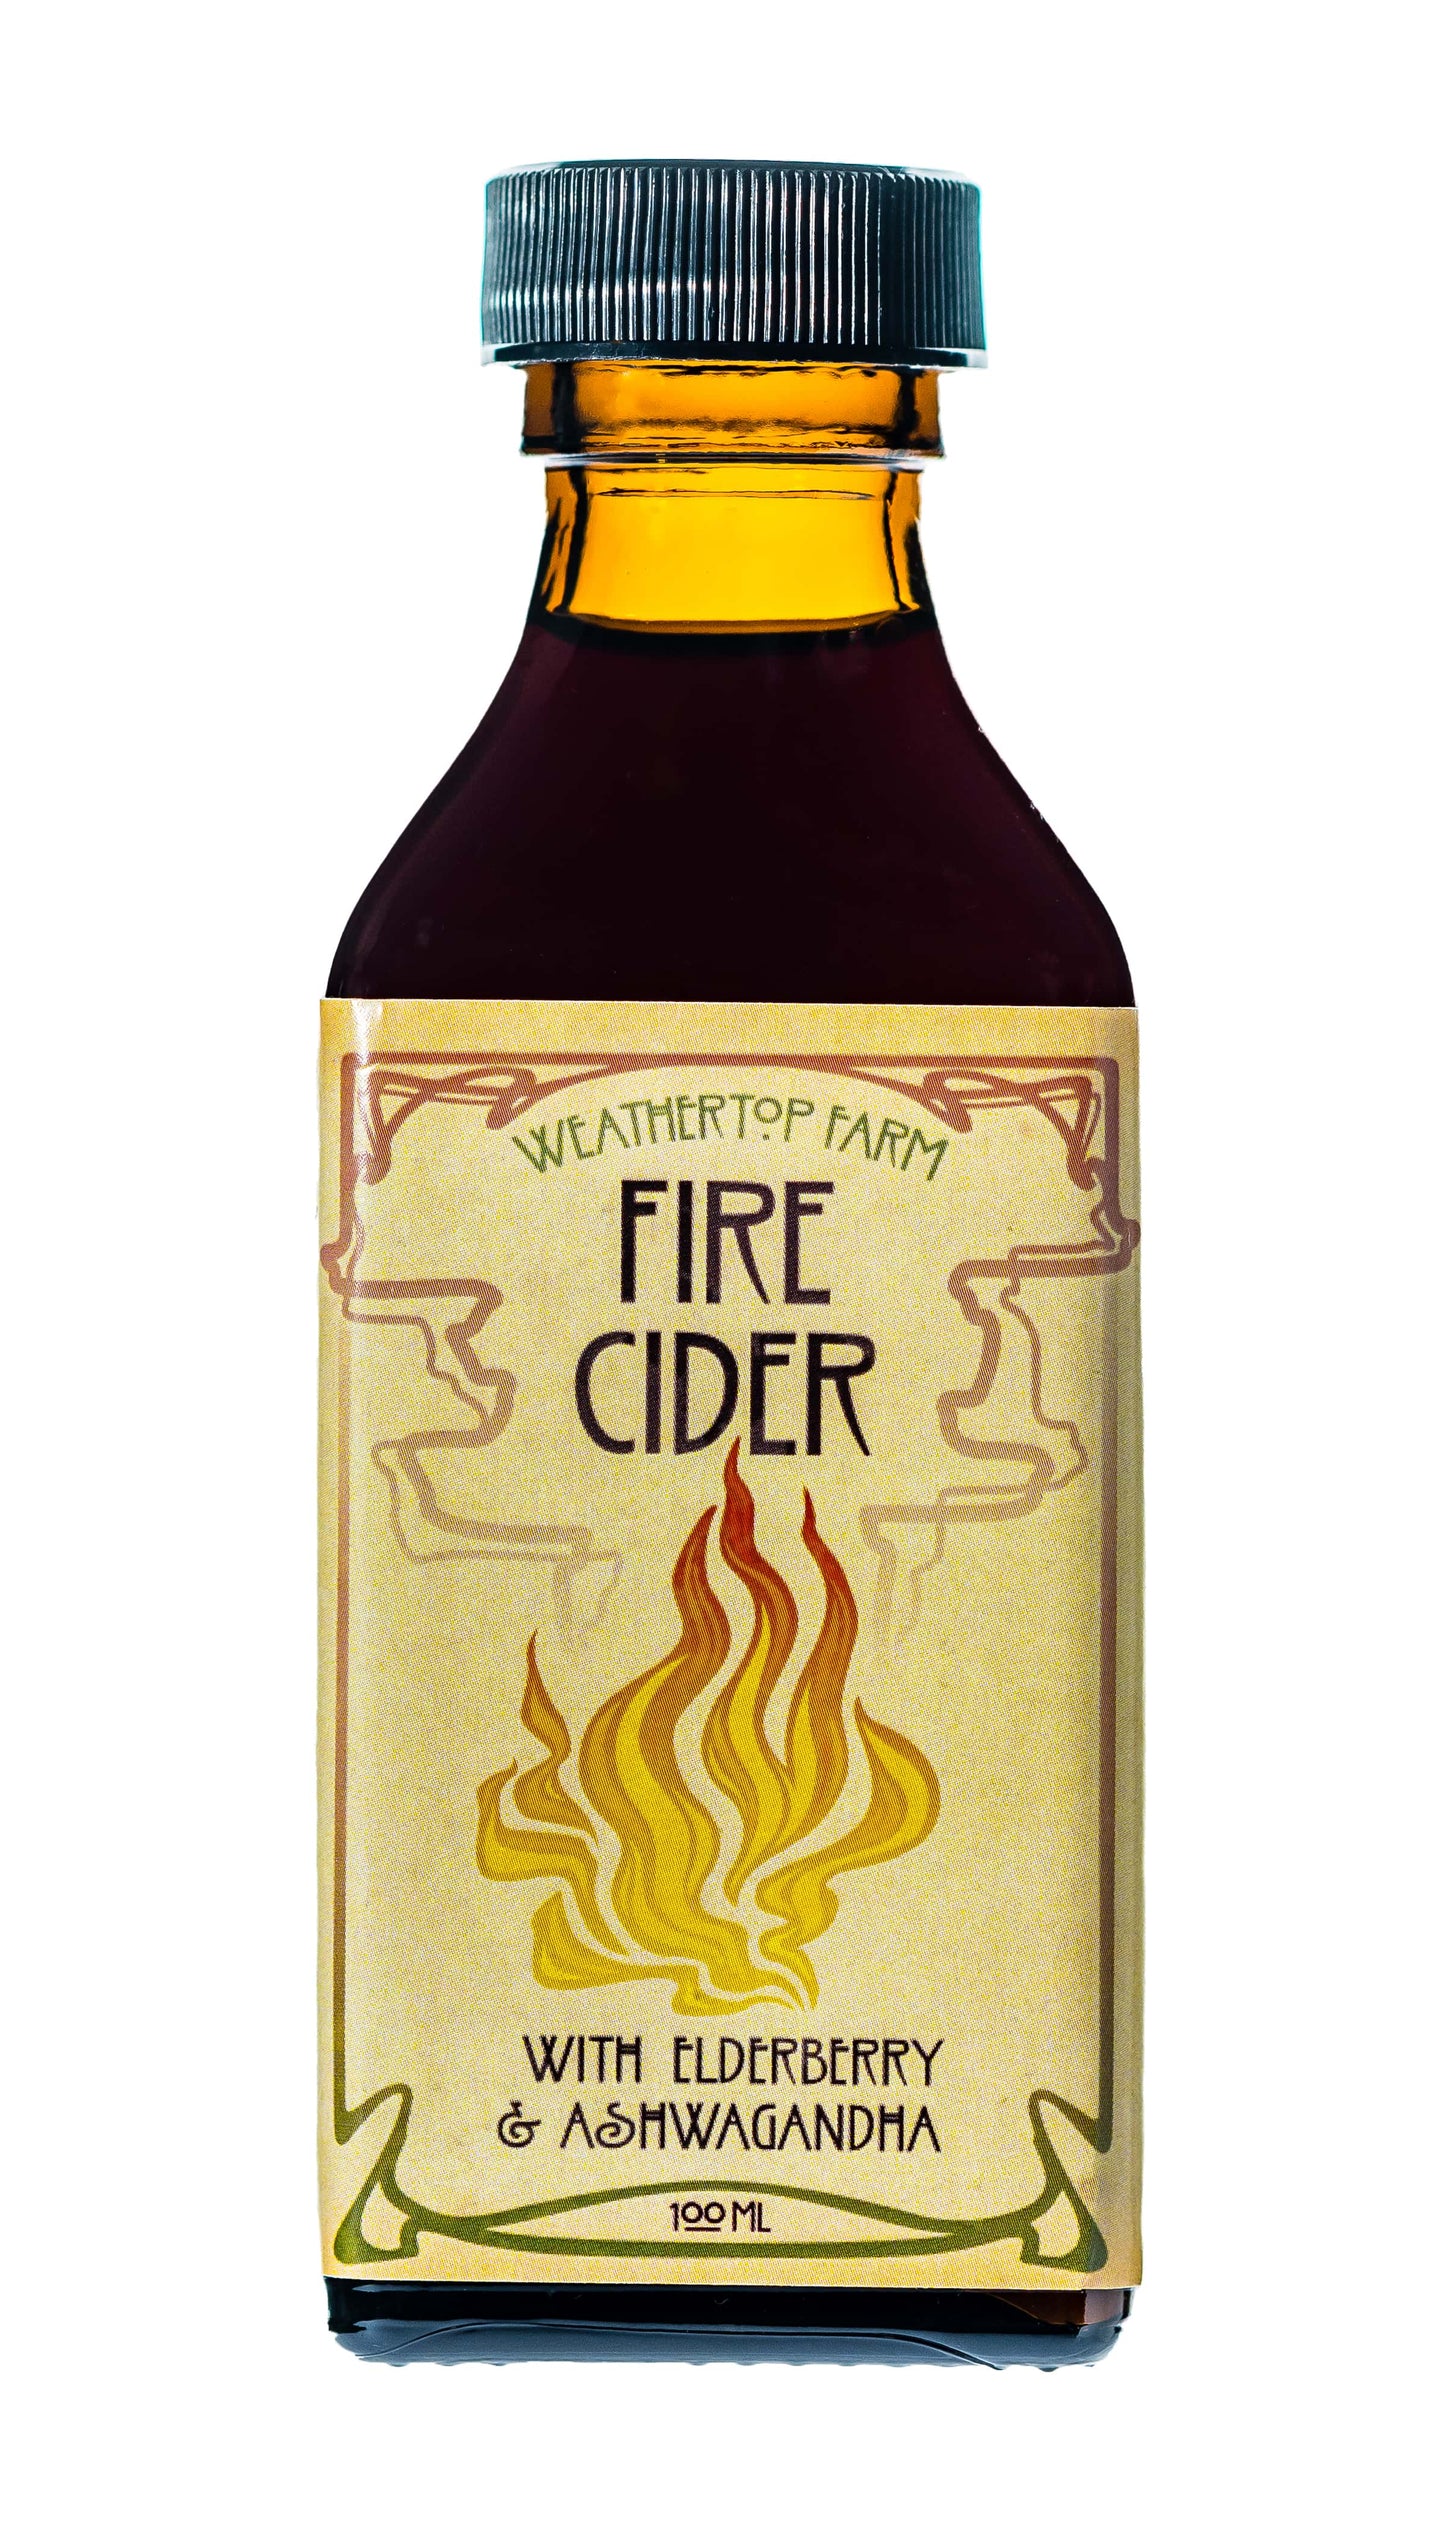 Fire Cider